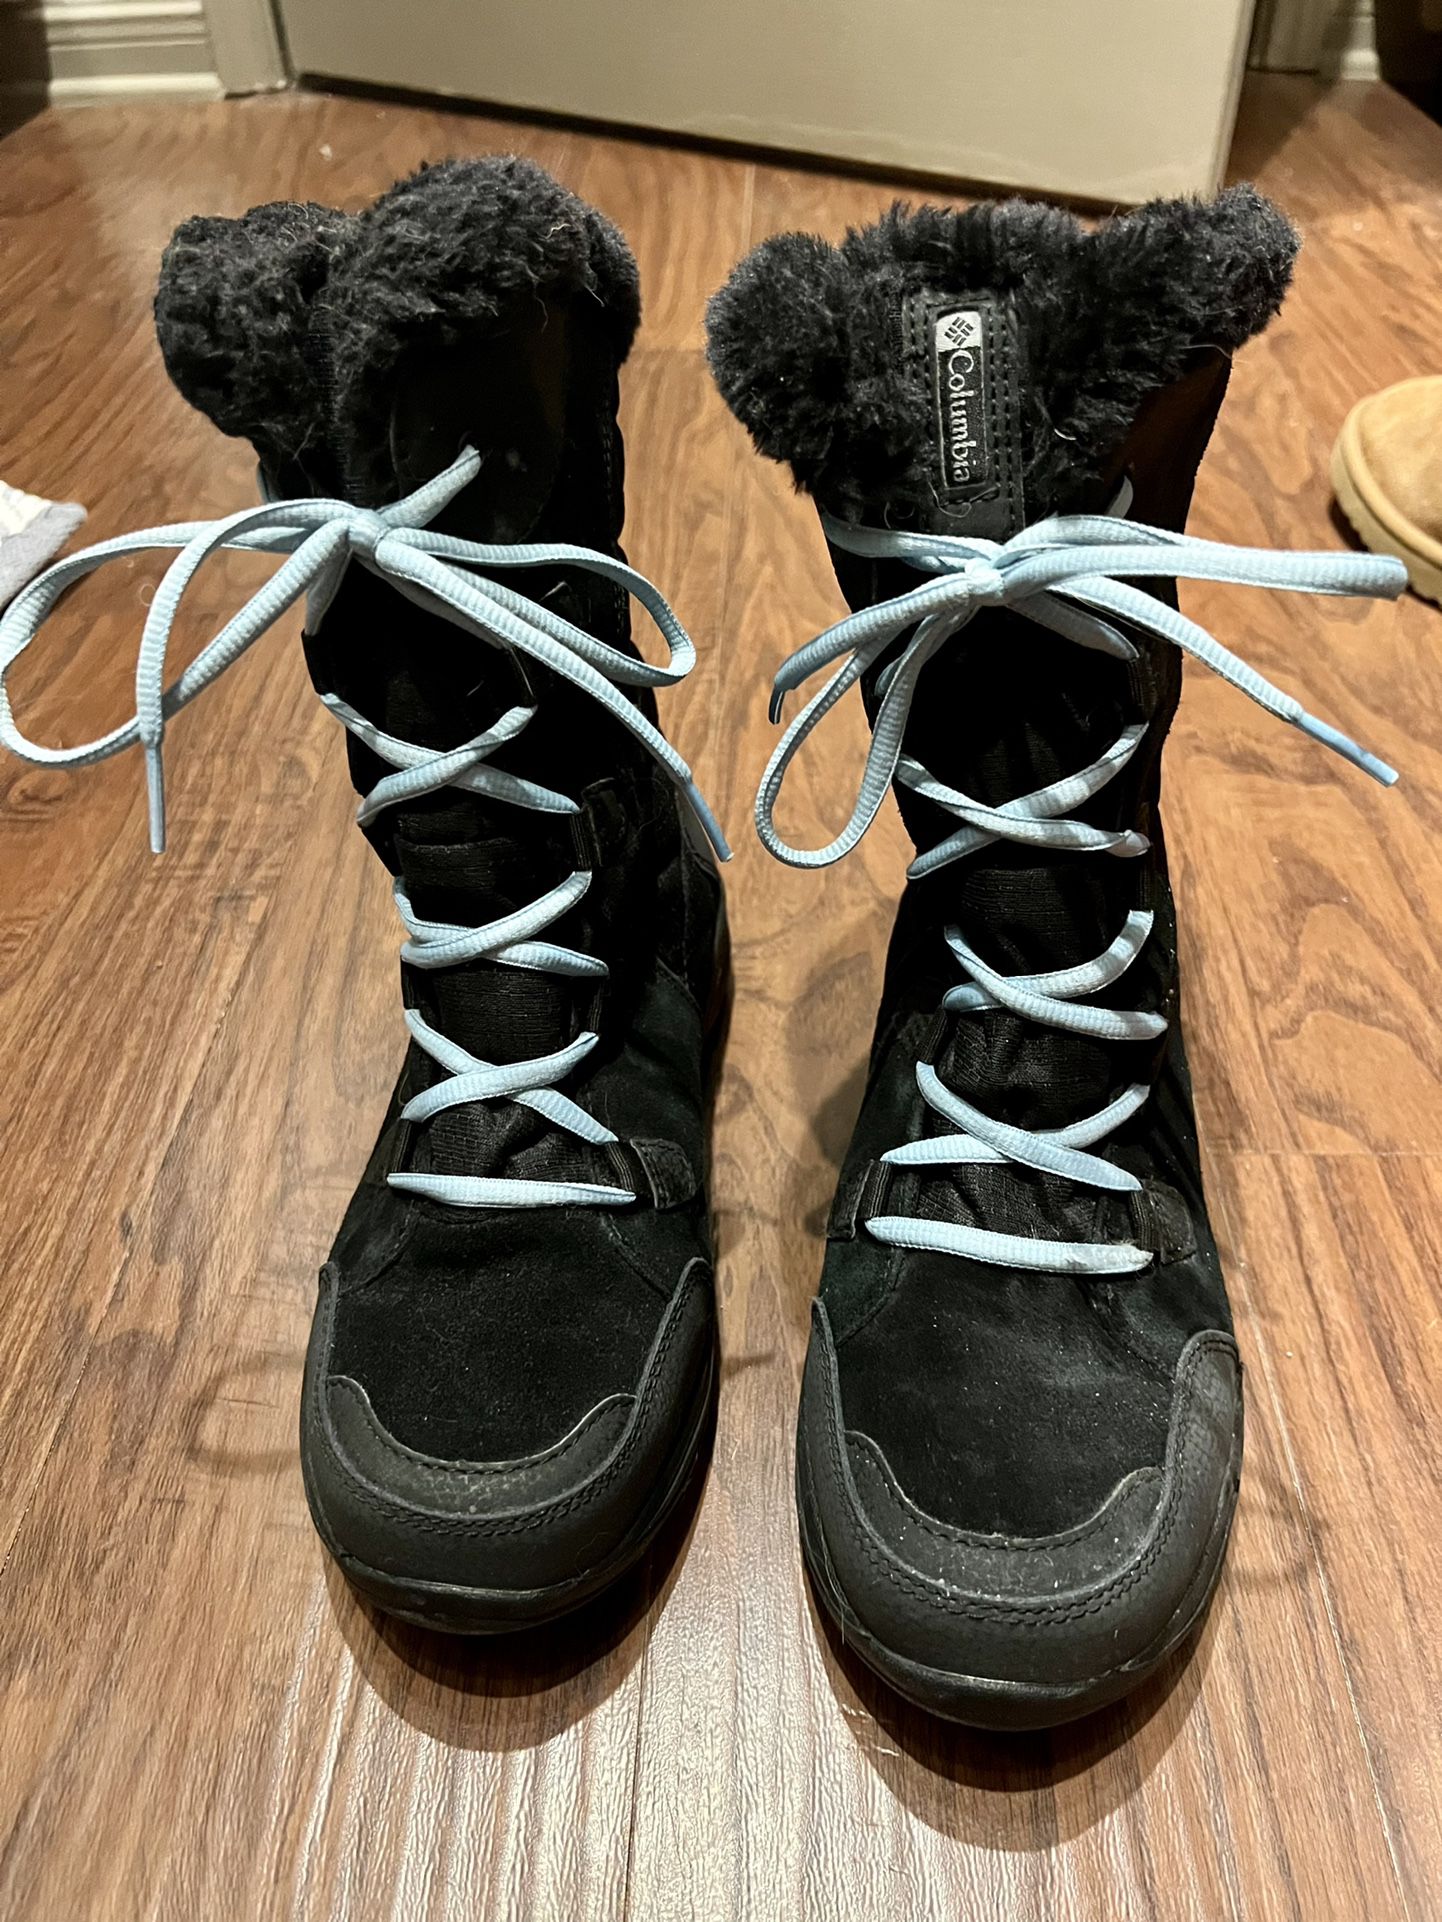 Columbia Ice Maiden II Snow Boots - Worn 1 Time